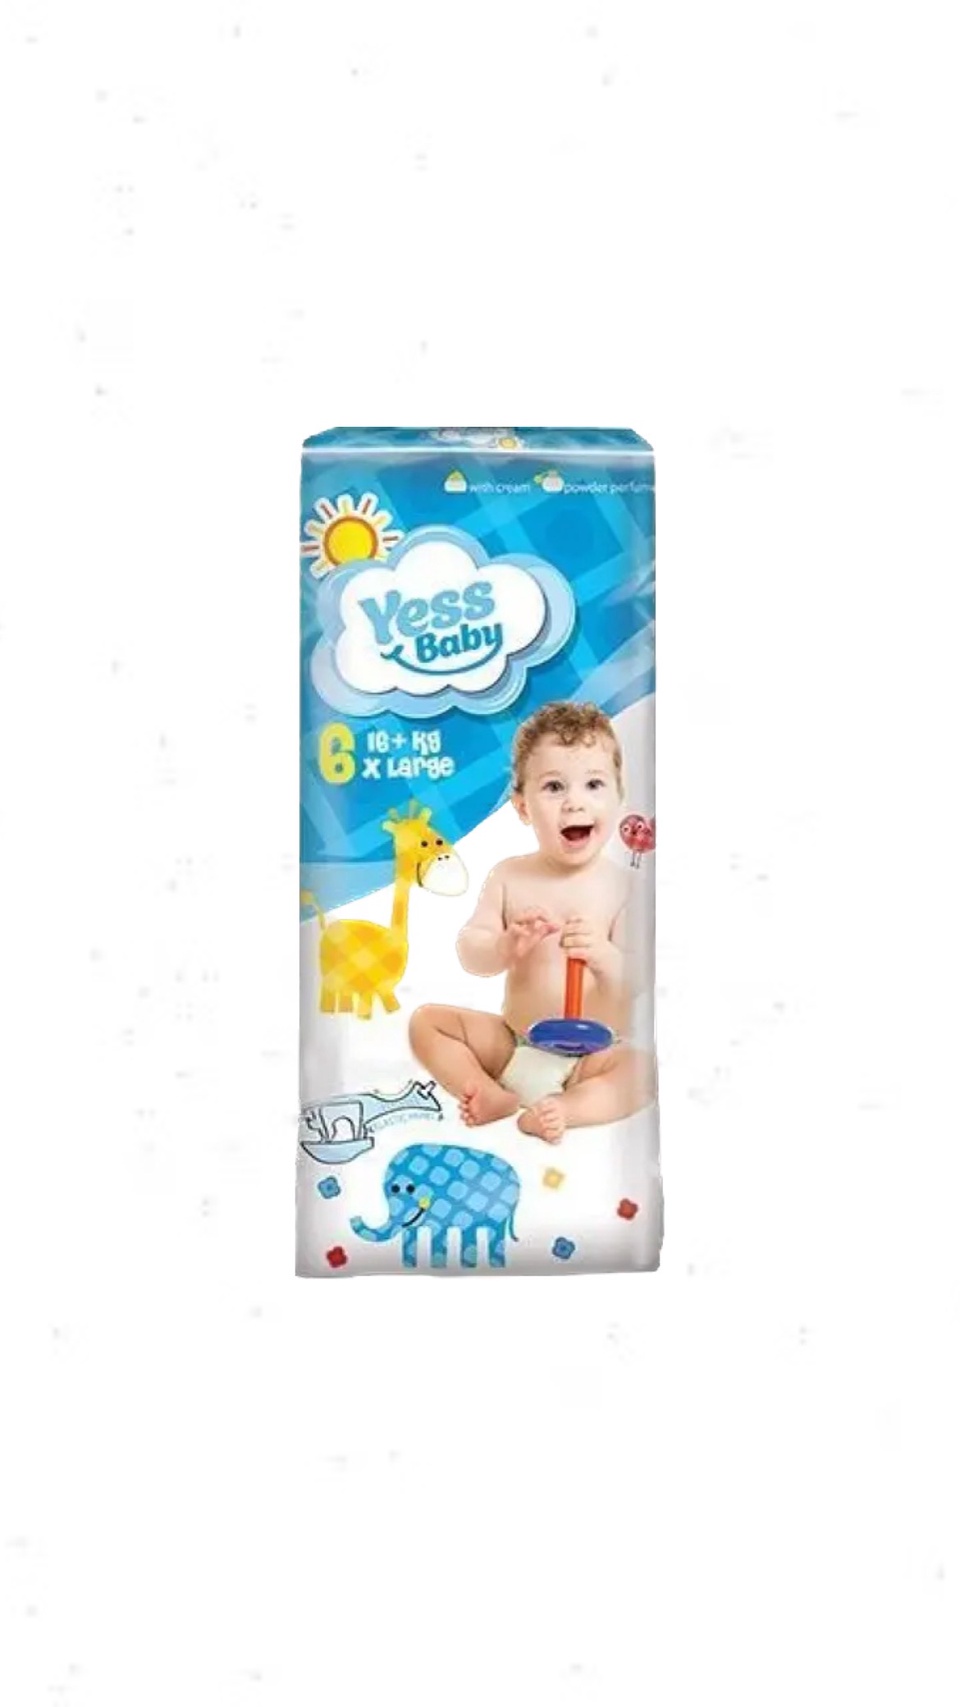 Yes Baby Подгузники 6 X Large 36шт - 750 ₽, заказать онлайн.